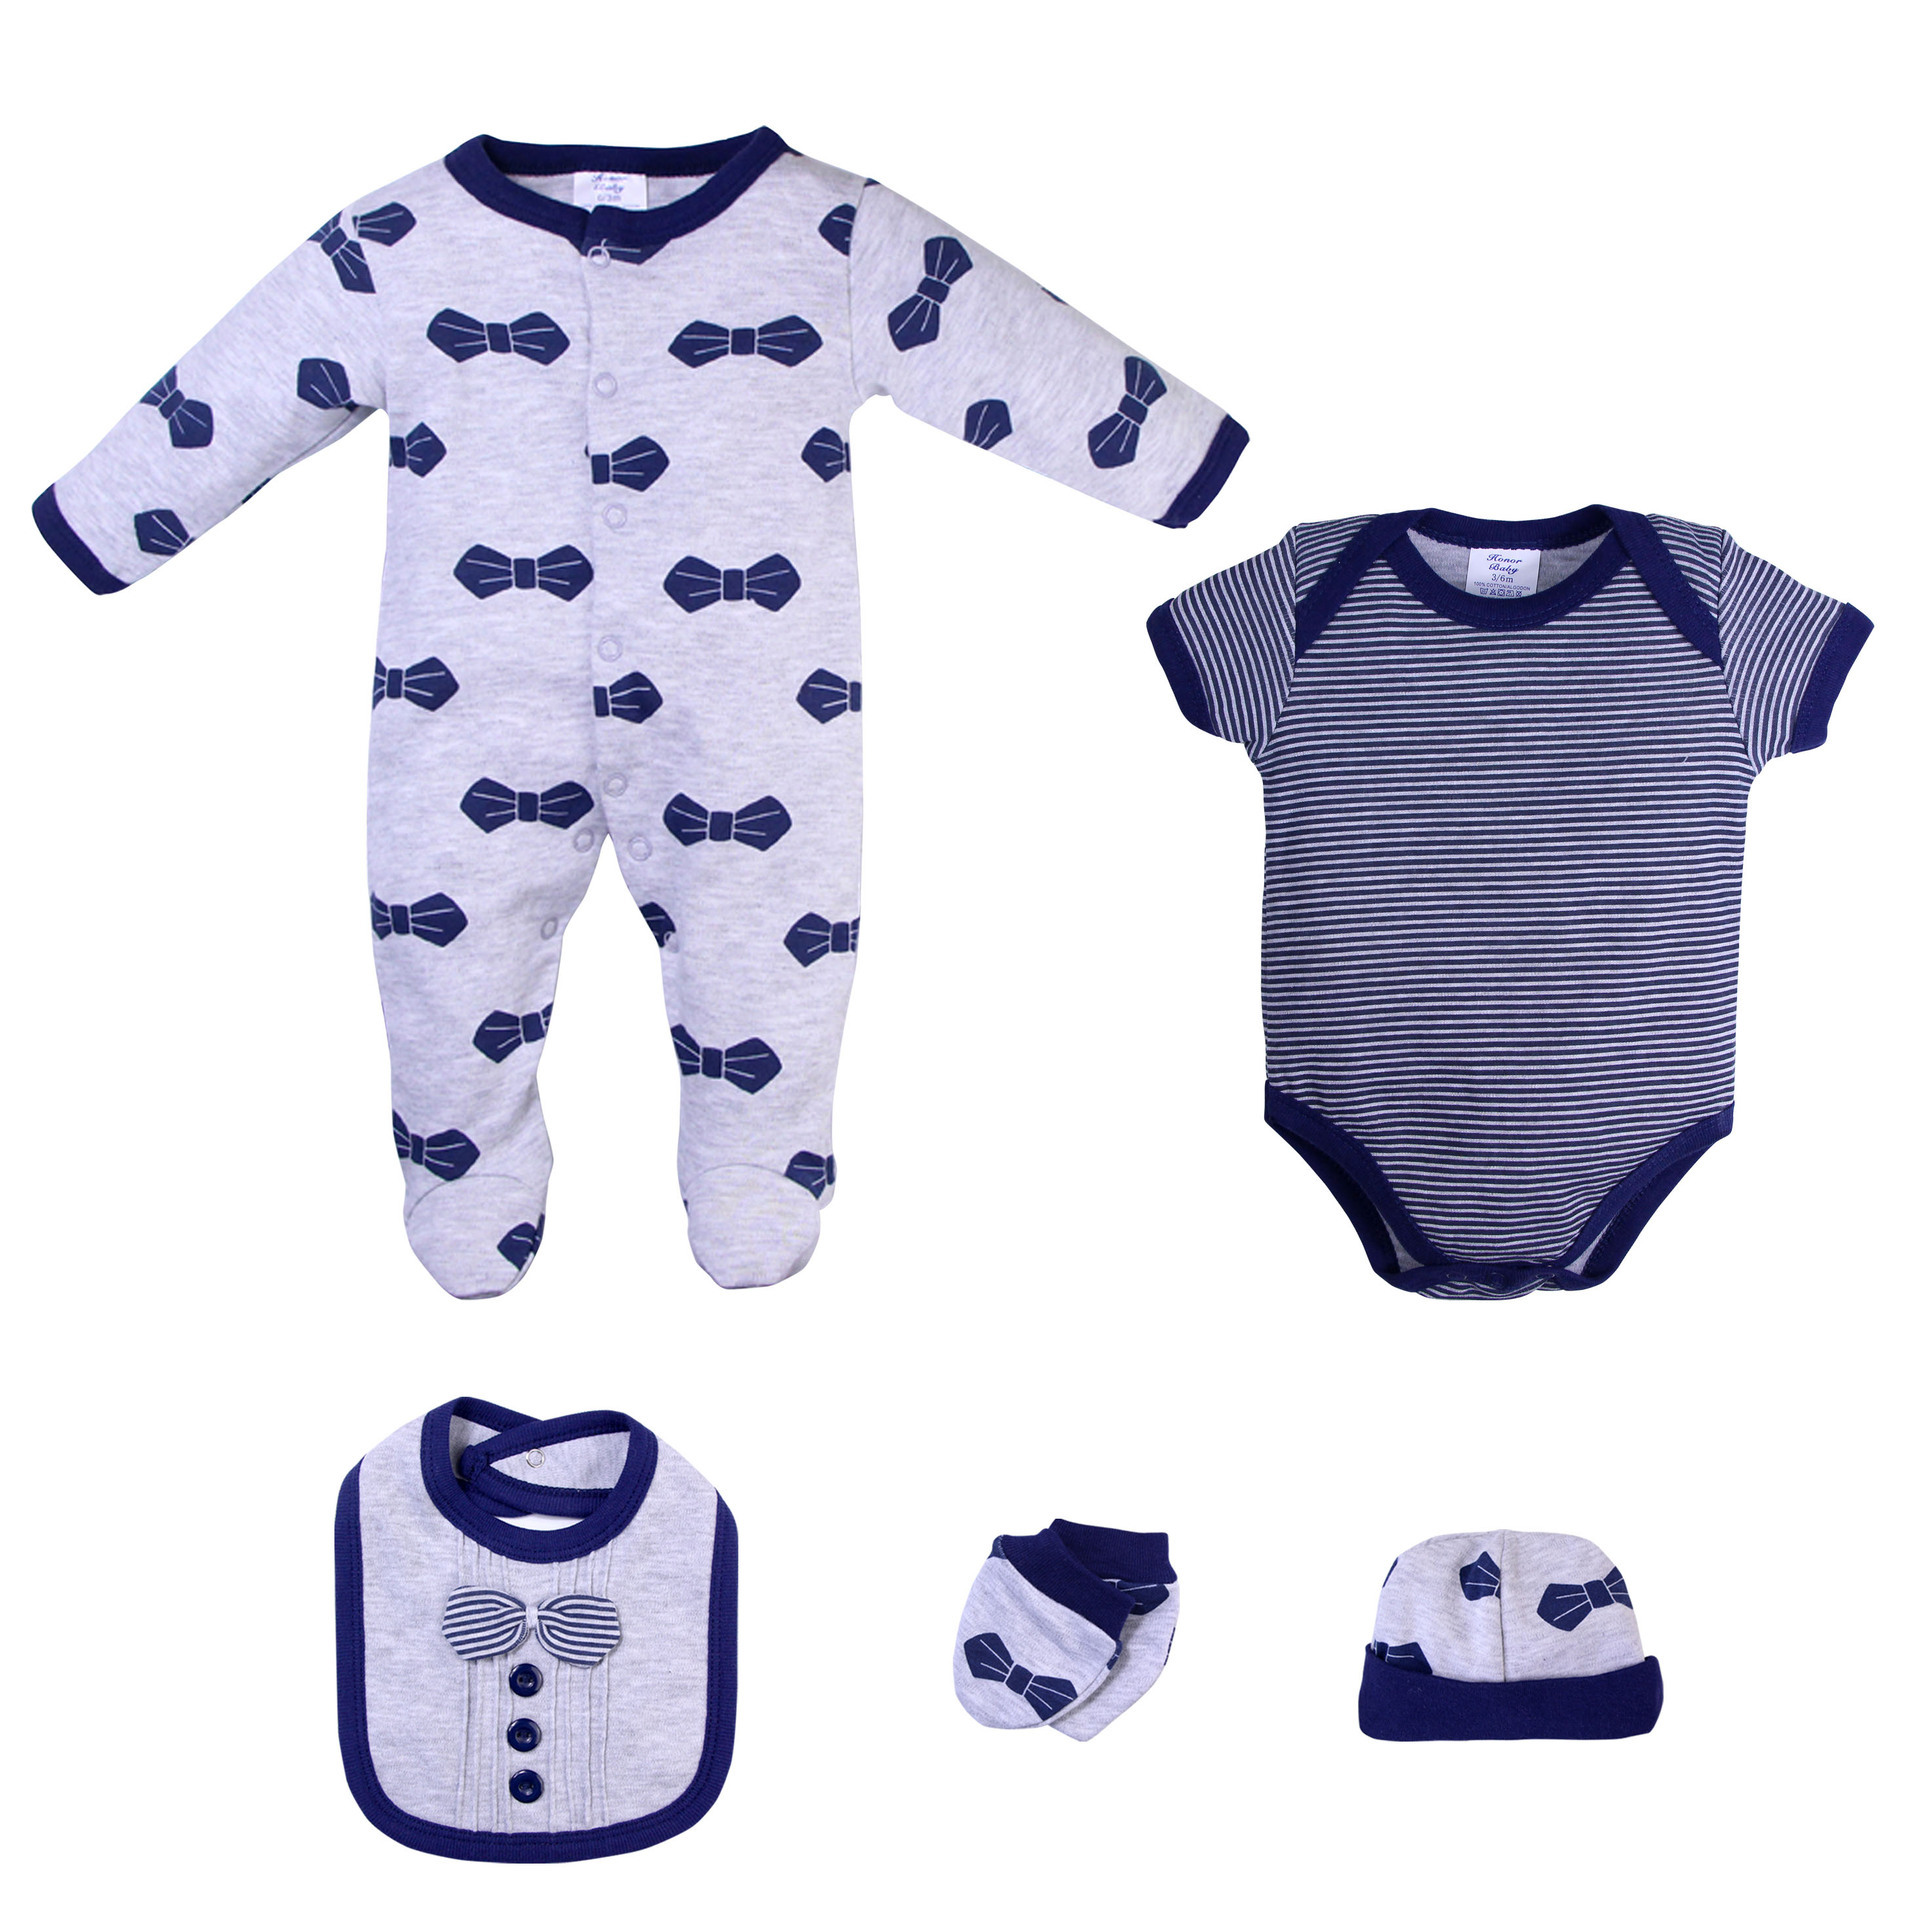 Foreign Trade Newborn Infant Cotton Five-Piece Suit Rompers Jumpsuit Baby Rompers Suit Match Sets Children's Clothing